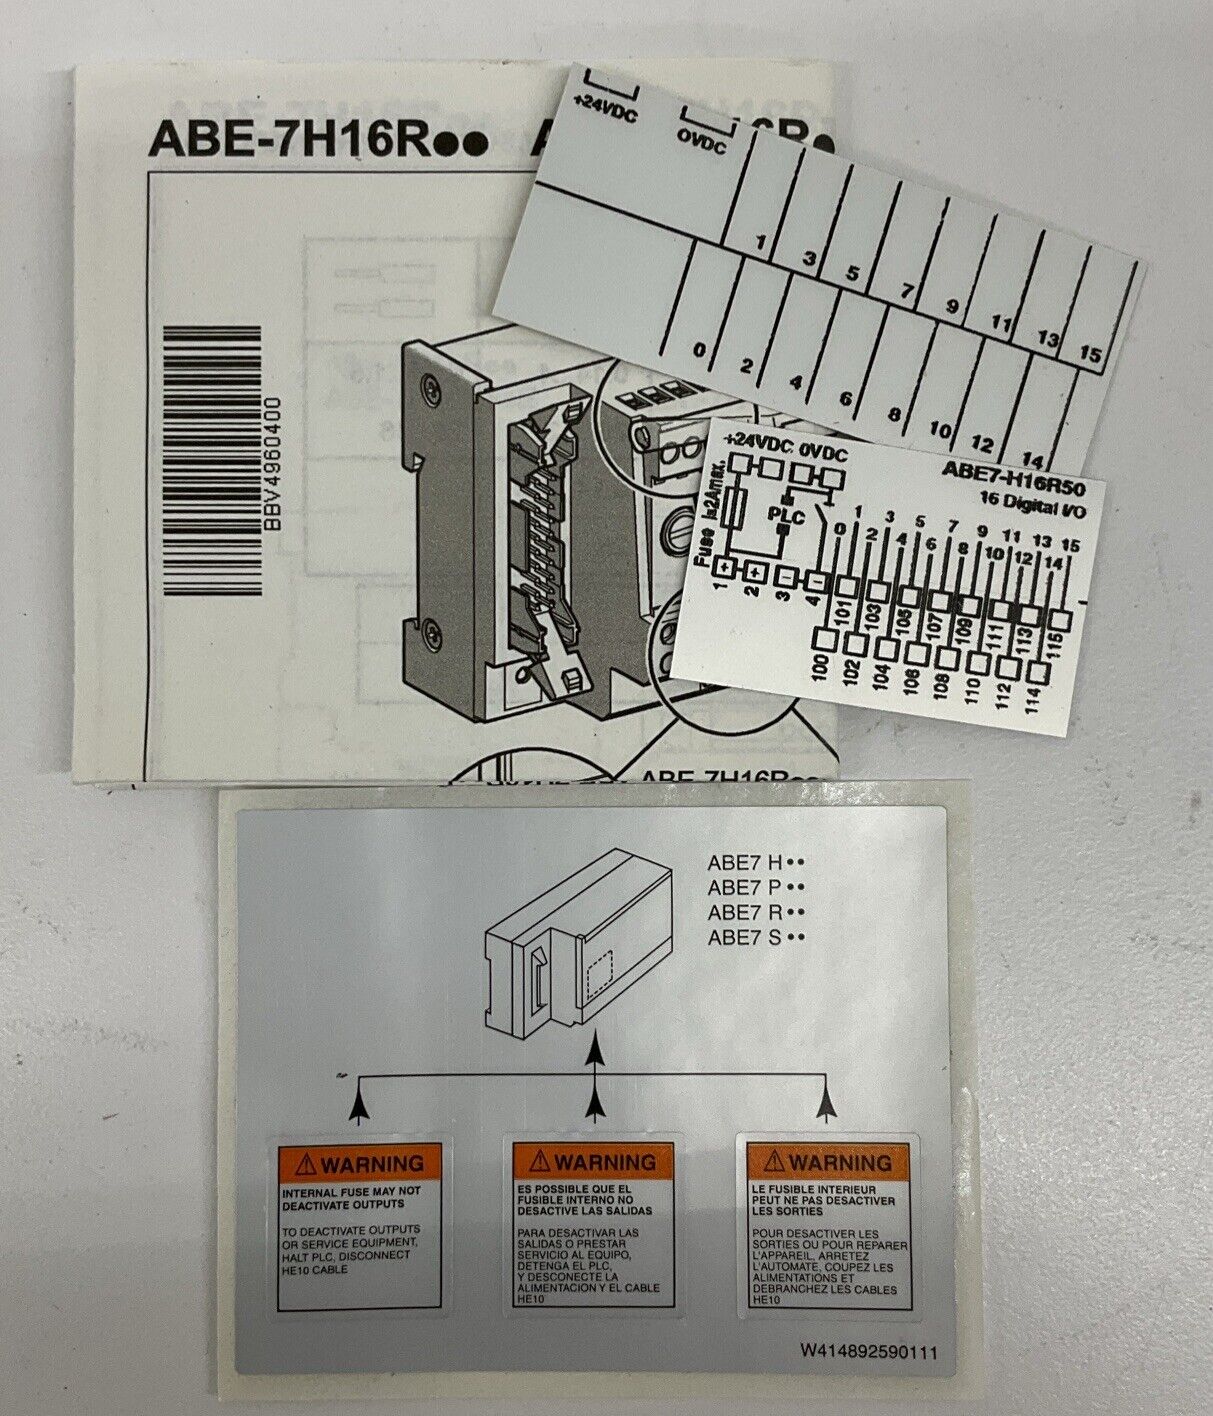 Schneider Electric Modicon ABE7-H16R50 I/O Interface Module NEW (CL368)